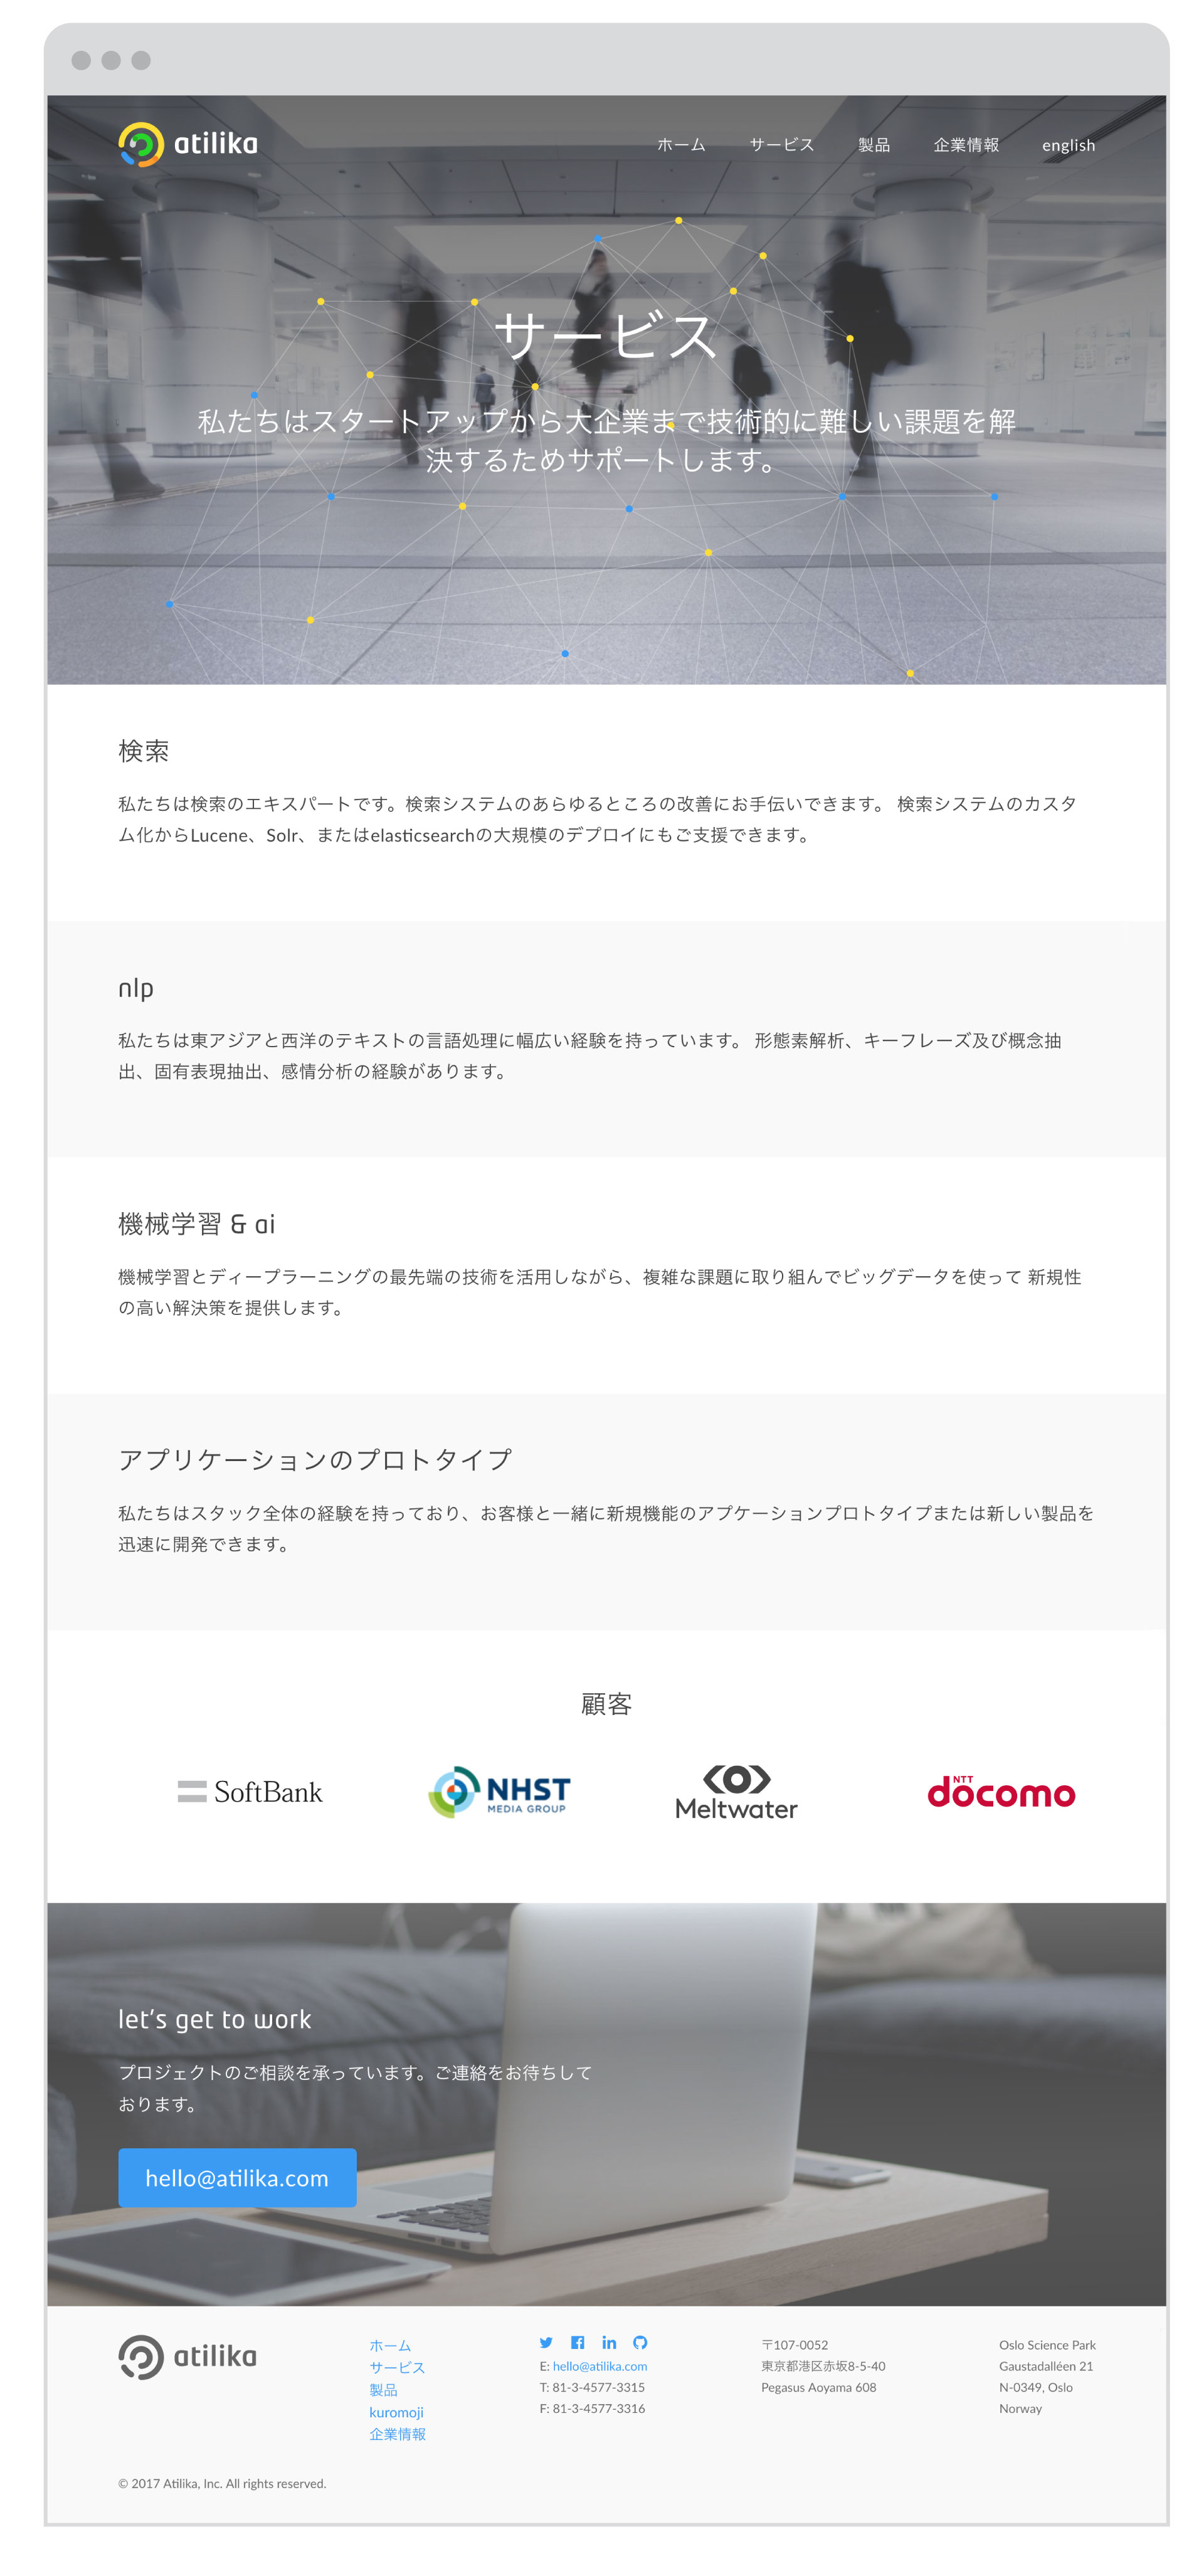 Atilika Tokyo Japan - ai artificial intelligence & language processing - Logo, Corporate Identity Design and Website UI Design